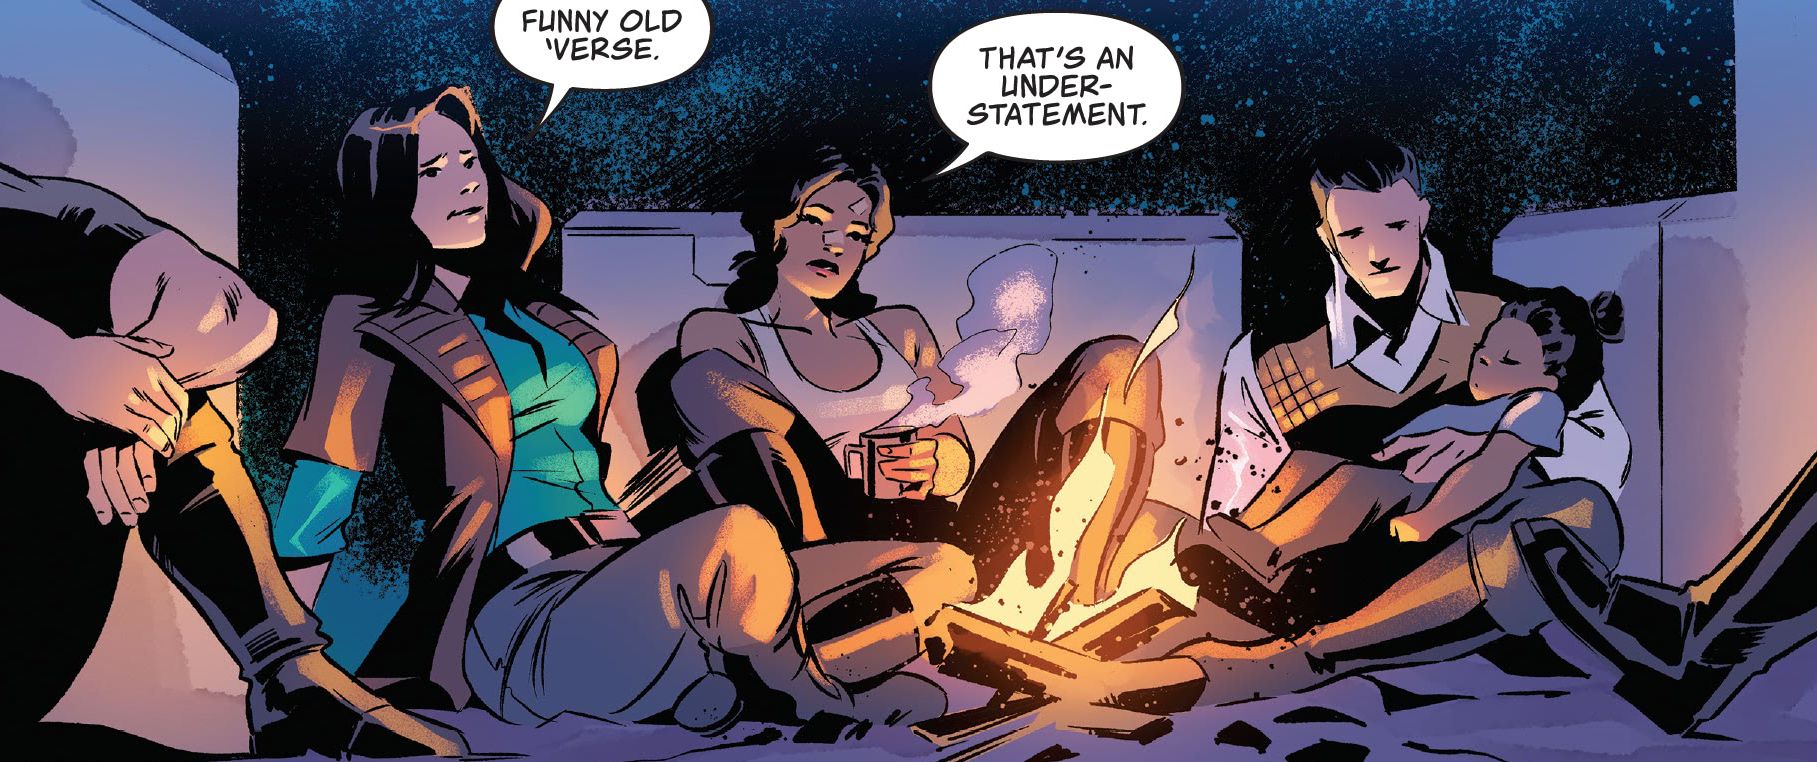 Kaylee, Zoe and Simon talk around a campfire